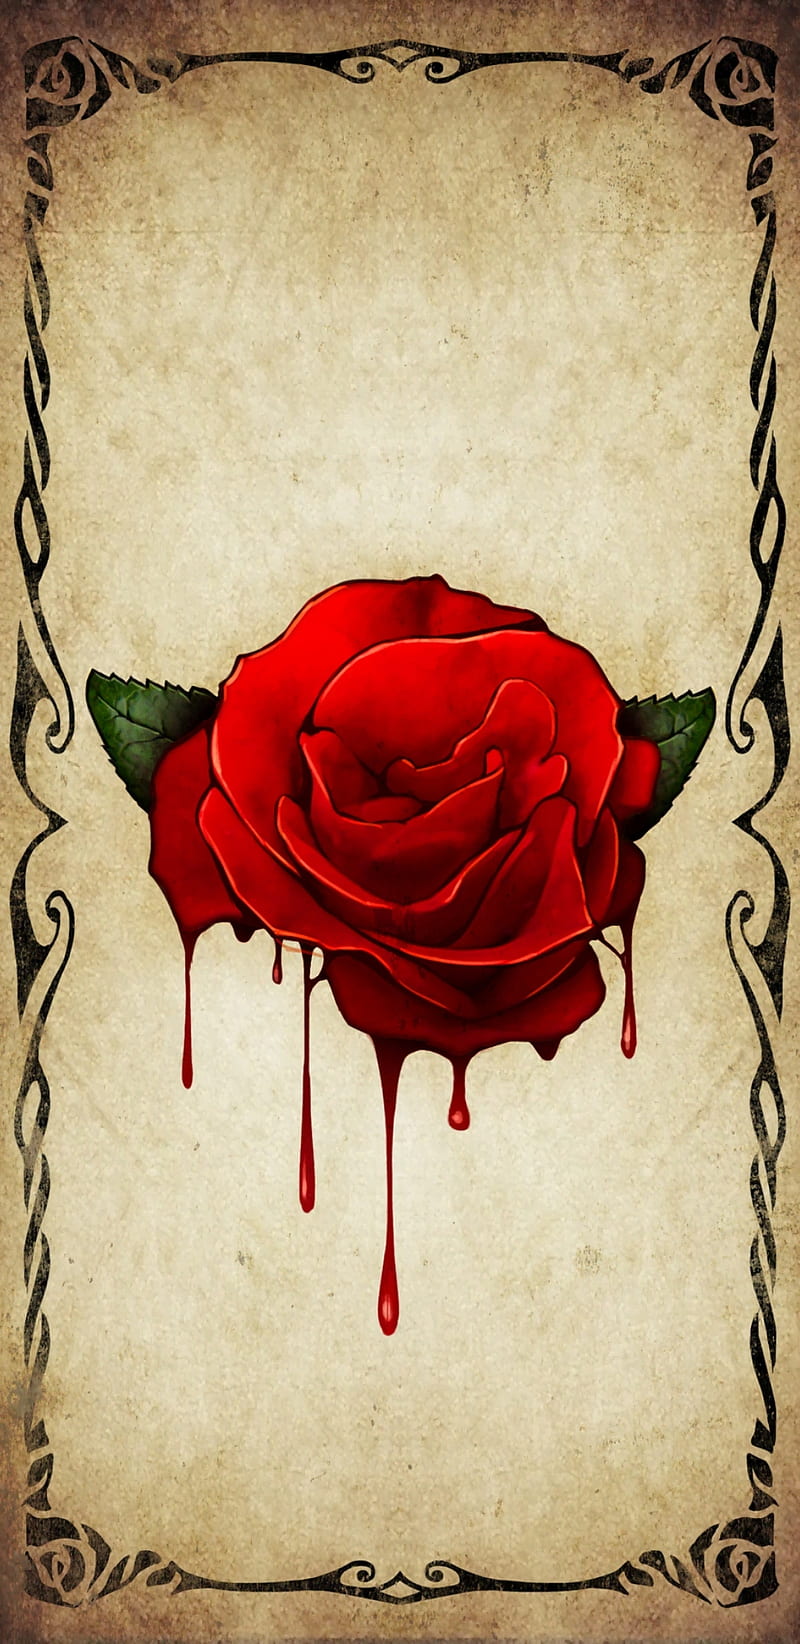 Blood roses 1080P 2K 4K 5K HD wallpapers free download  Wallpaper Flare